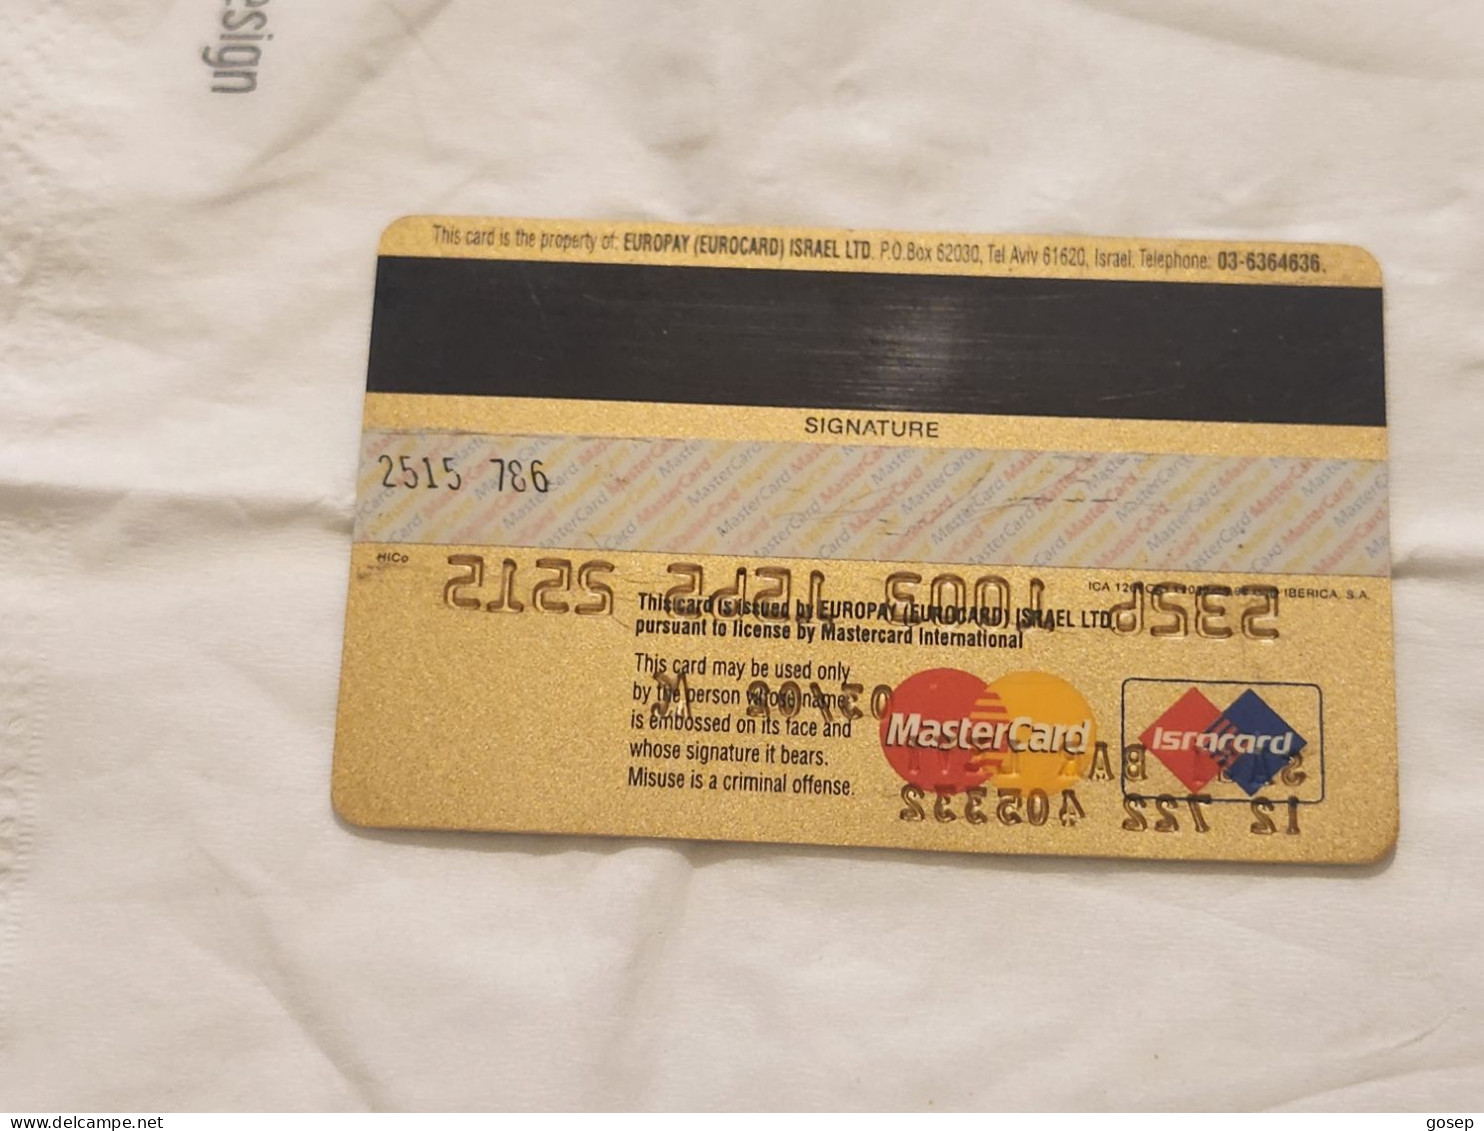 ISRAEL-GOLD MASTER CARD-BANK HAPOALIM-ISRACARD-(5326-1003-1565-2515)-(03/02)-used Card - Carte Di Credito (scadenza Min. 10 Anni)